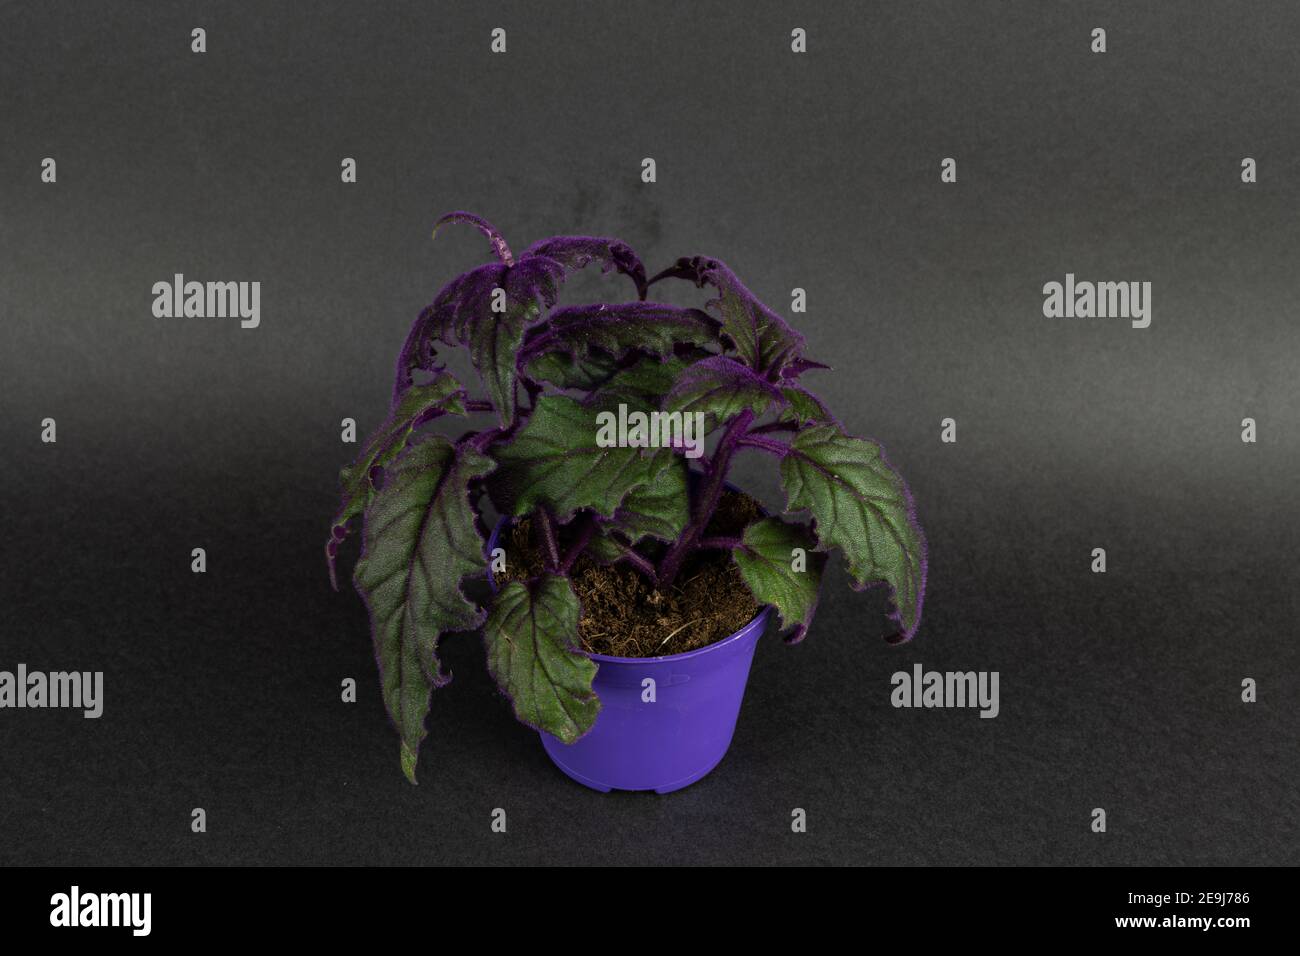 gynura aurantiaca in pot in black background, top view Stock Photo